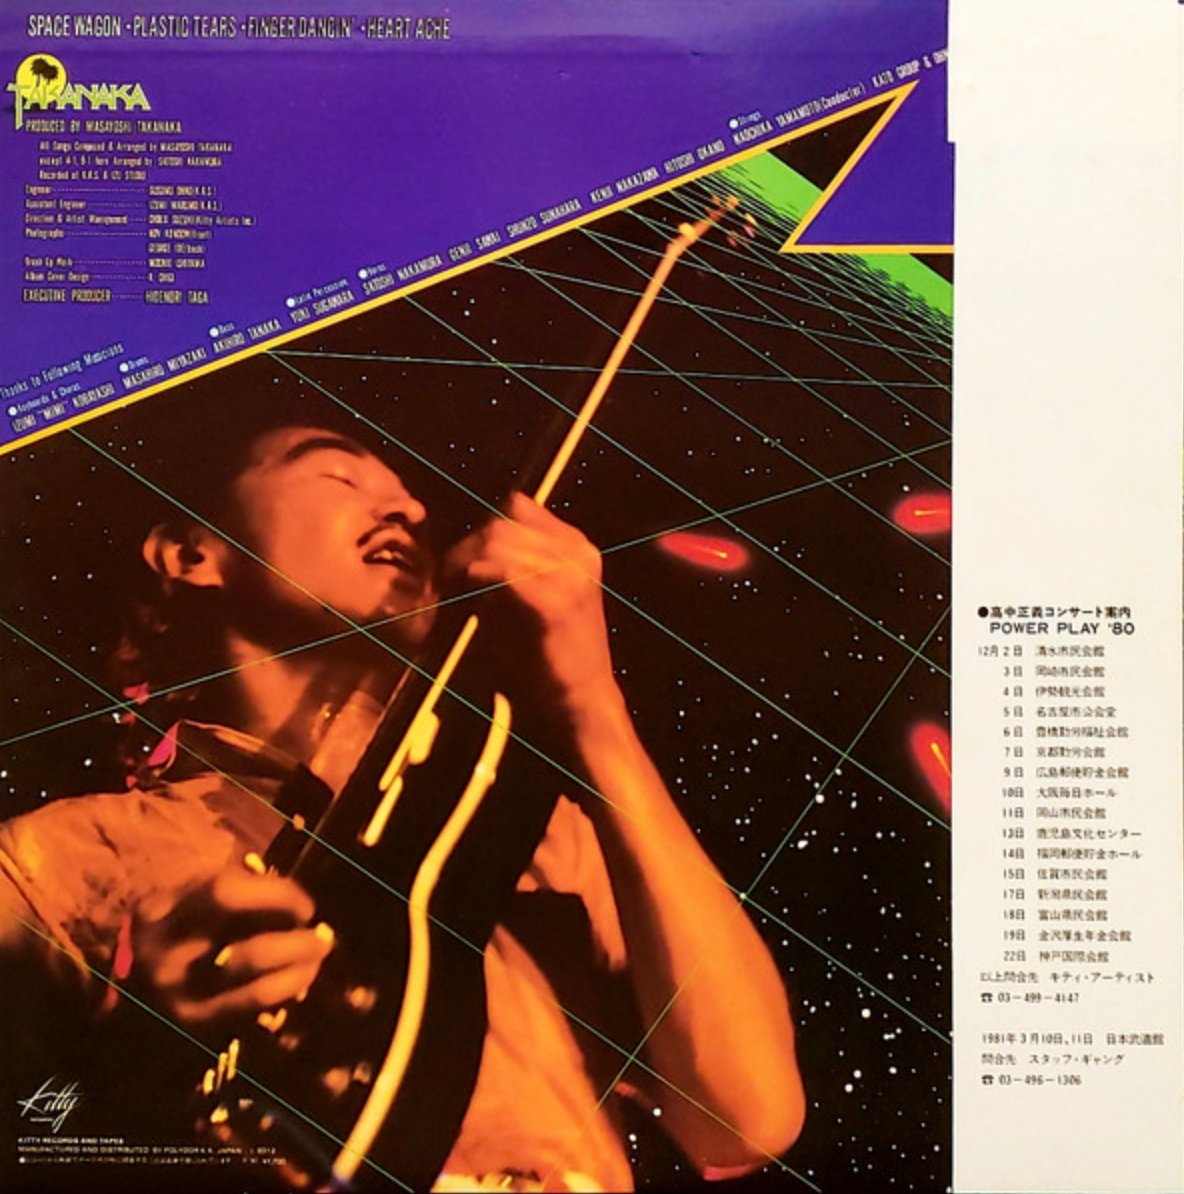 Masayoshi Takanaka - Finger Dancin' (Japan Import) - Inner Ocean Records